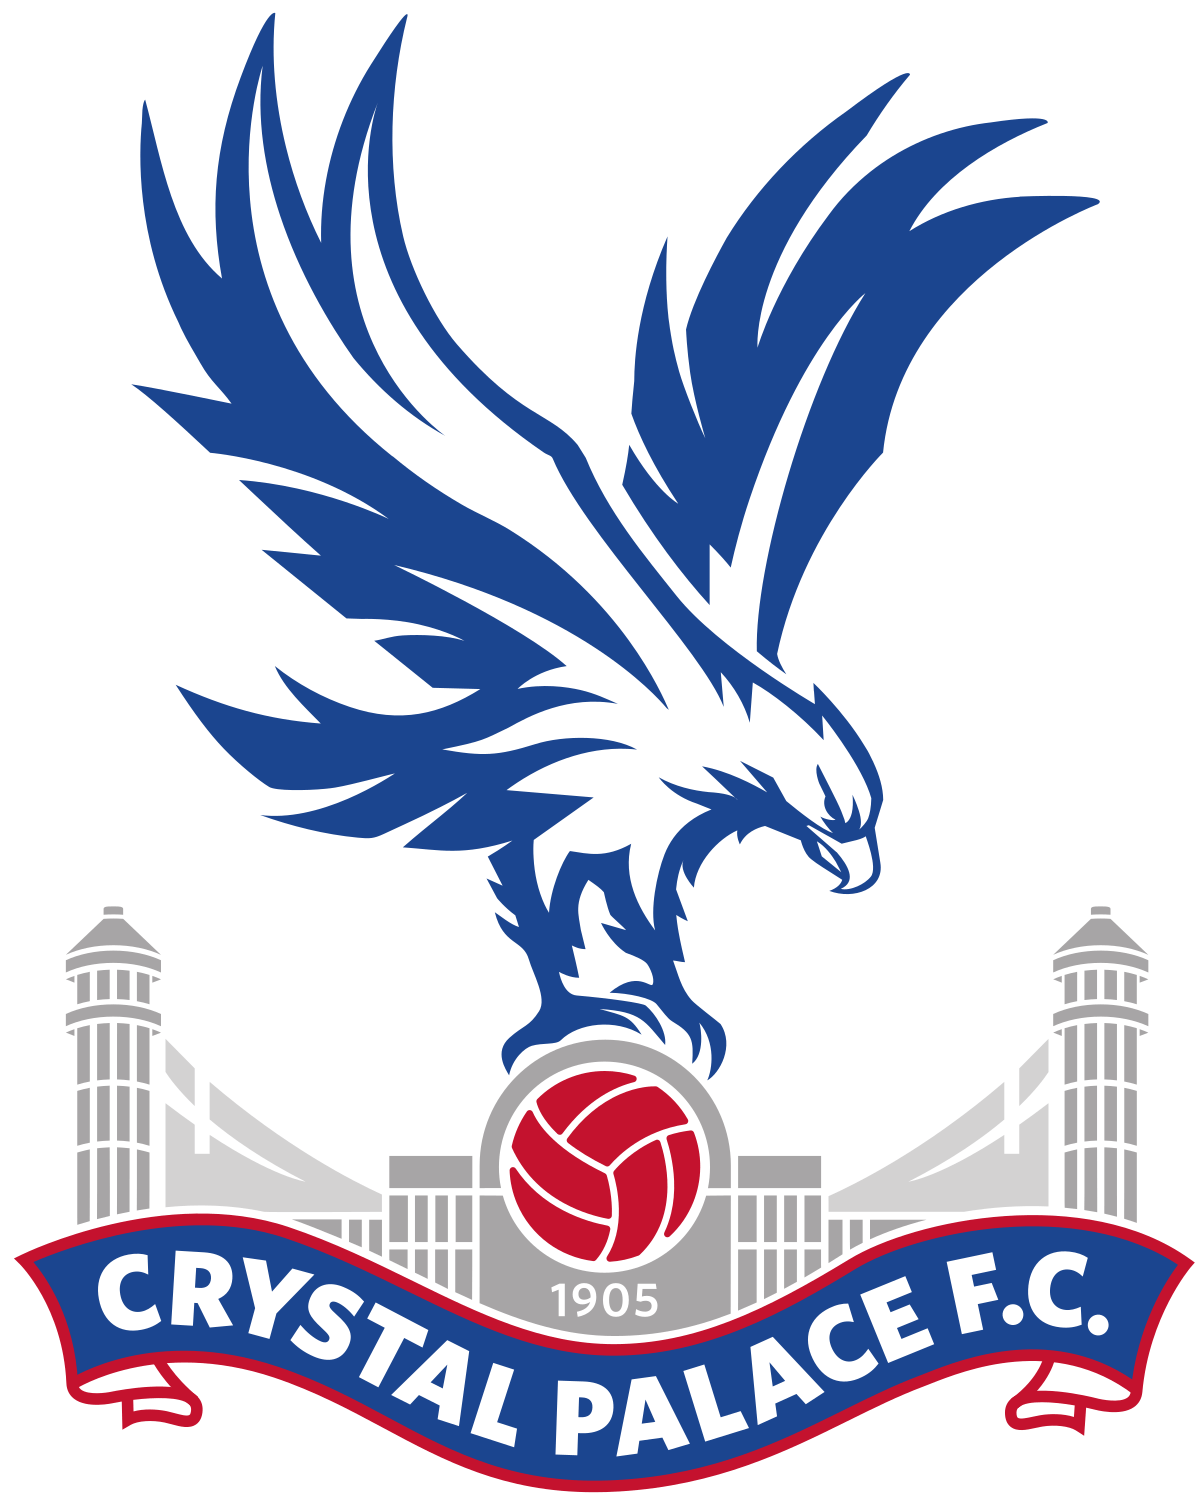 Black and White Eagle Football Logo - Crystal Palace F.C.